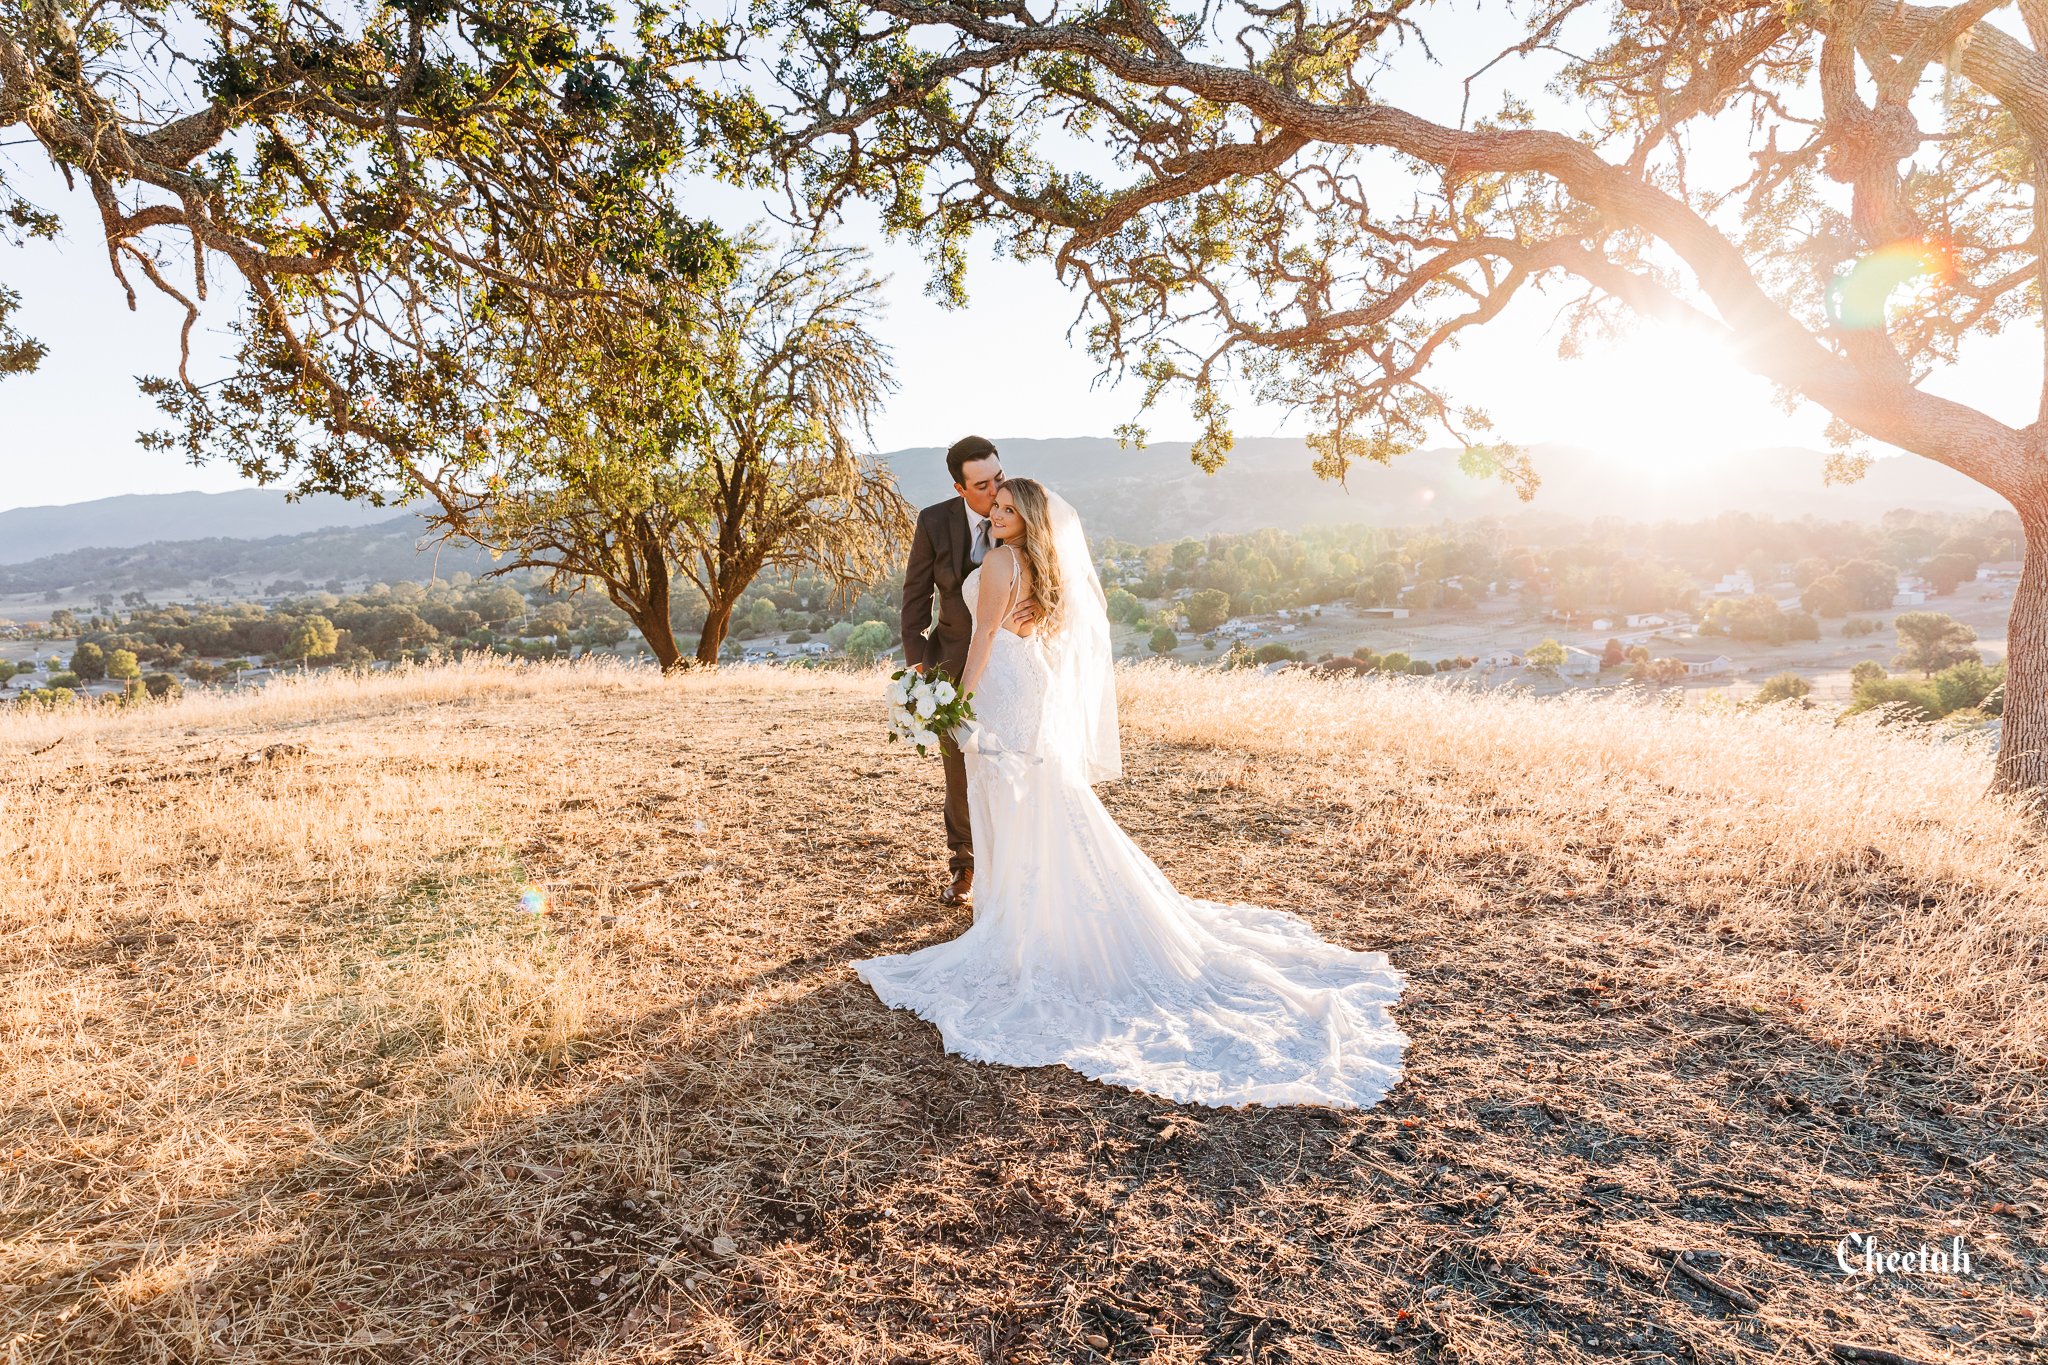 Evan & Rachel Wedding Cheetah DJ & Photography San Luis Obispo Ca2139.jpg